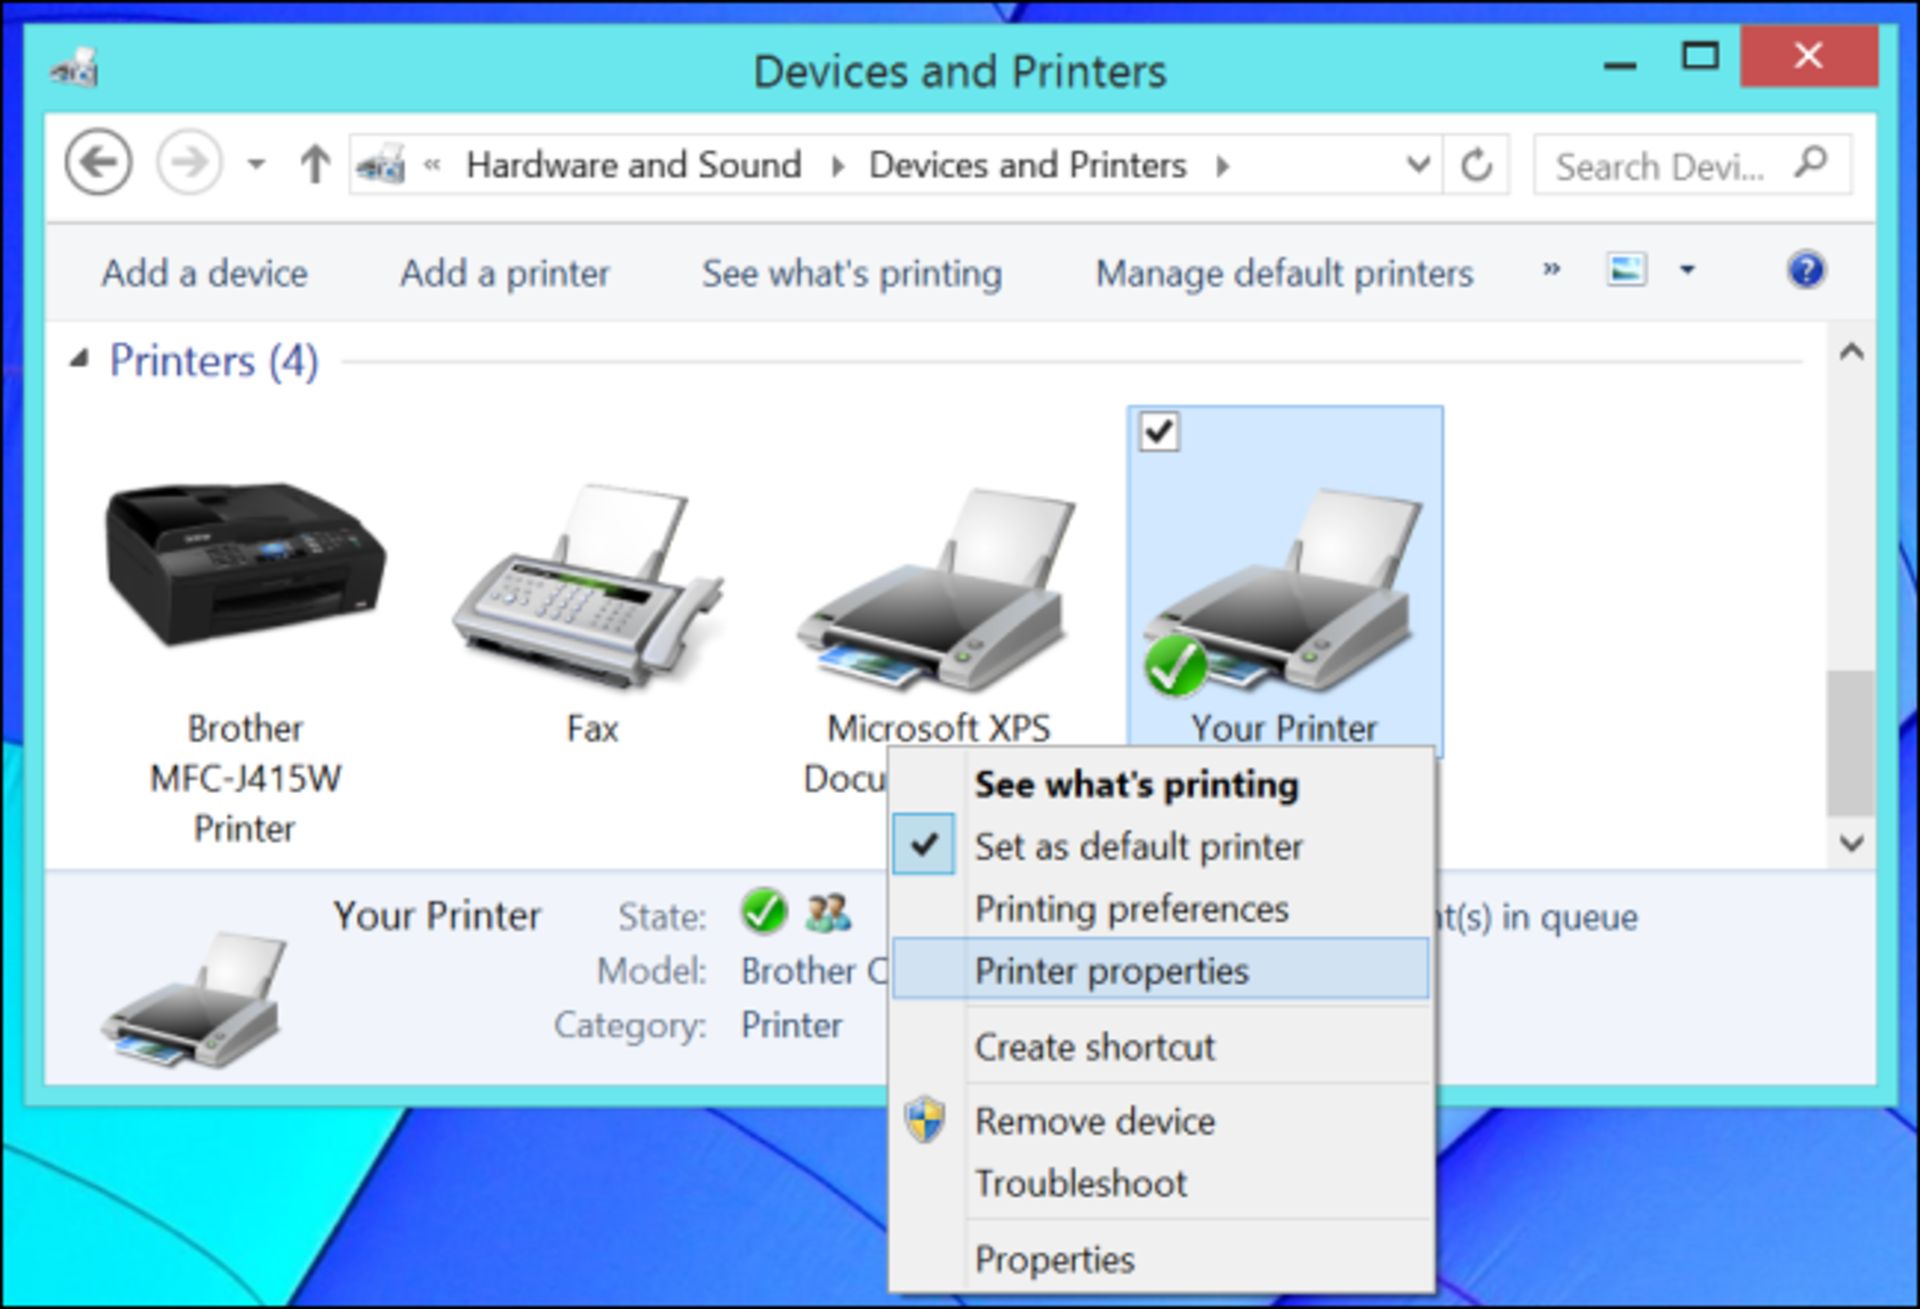 2-open-printer-properties-on-windows-to-share-printer